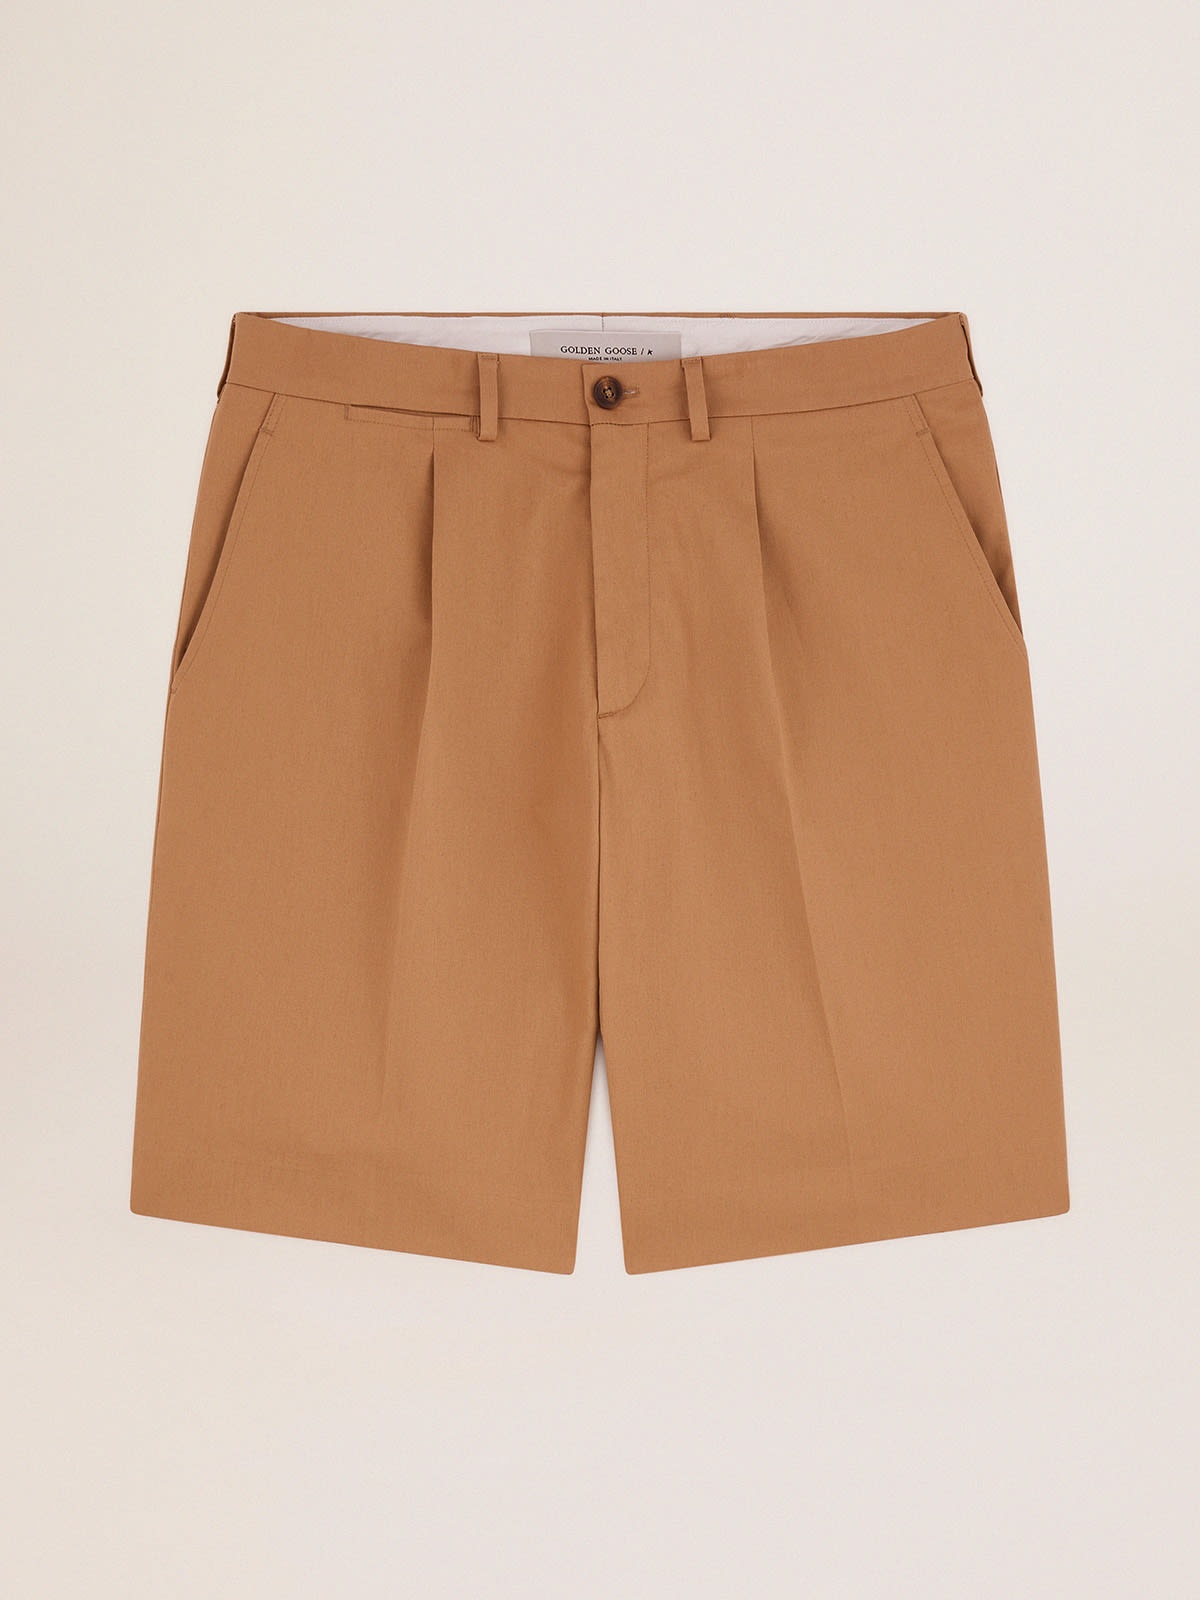 Men's bermuda shorts in beige cotton - 1